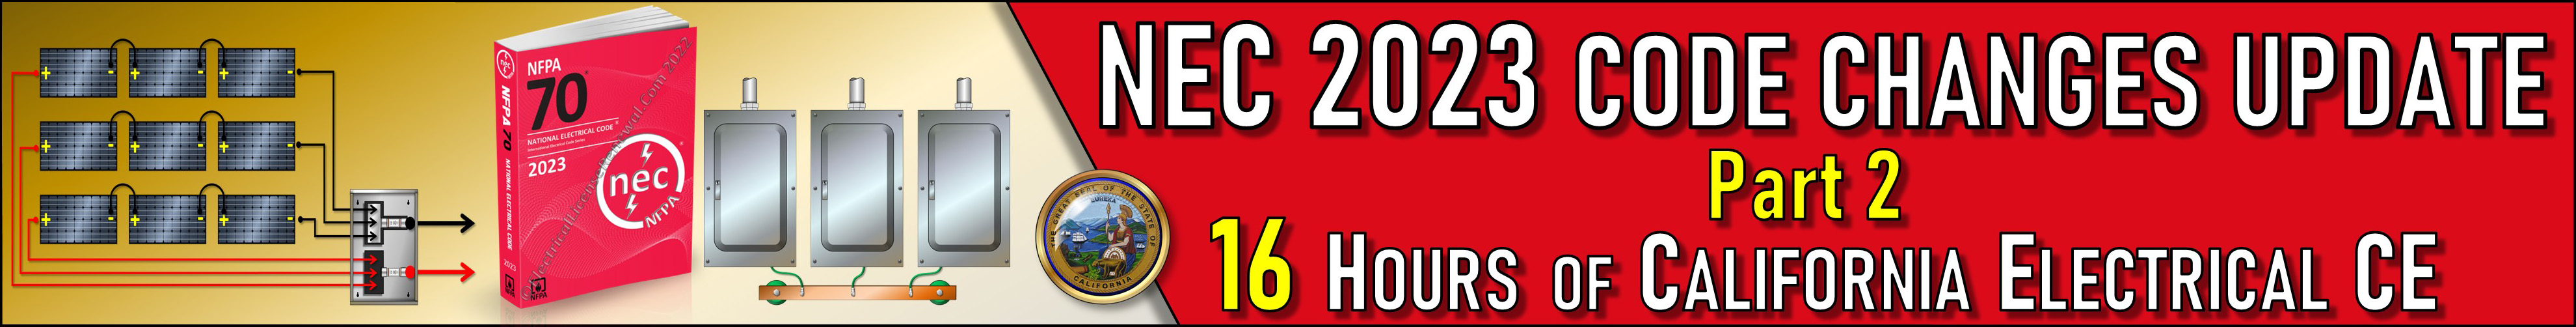 NEC 2023 Code Changes Update Part 2 - 16 Hours Banner